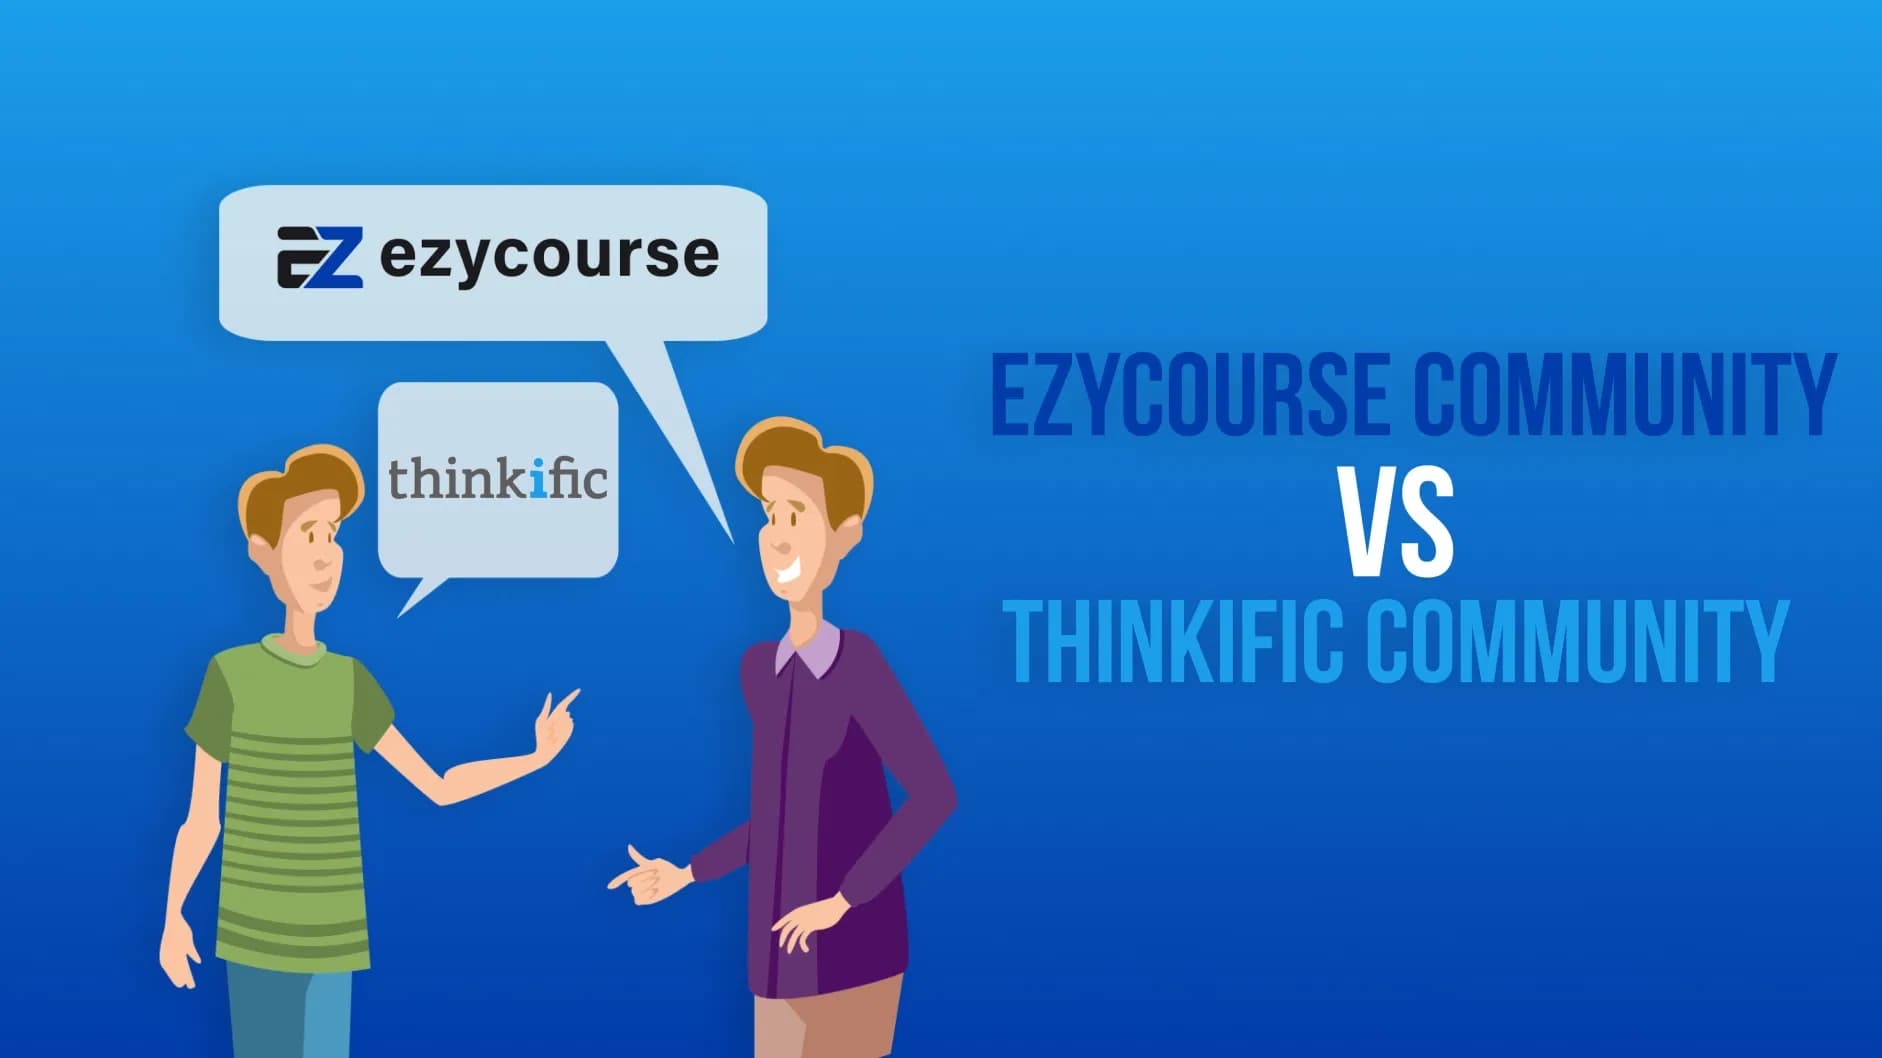 Thinkific community vs. EzyCourse community